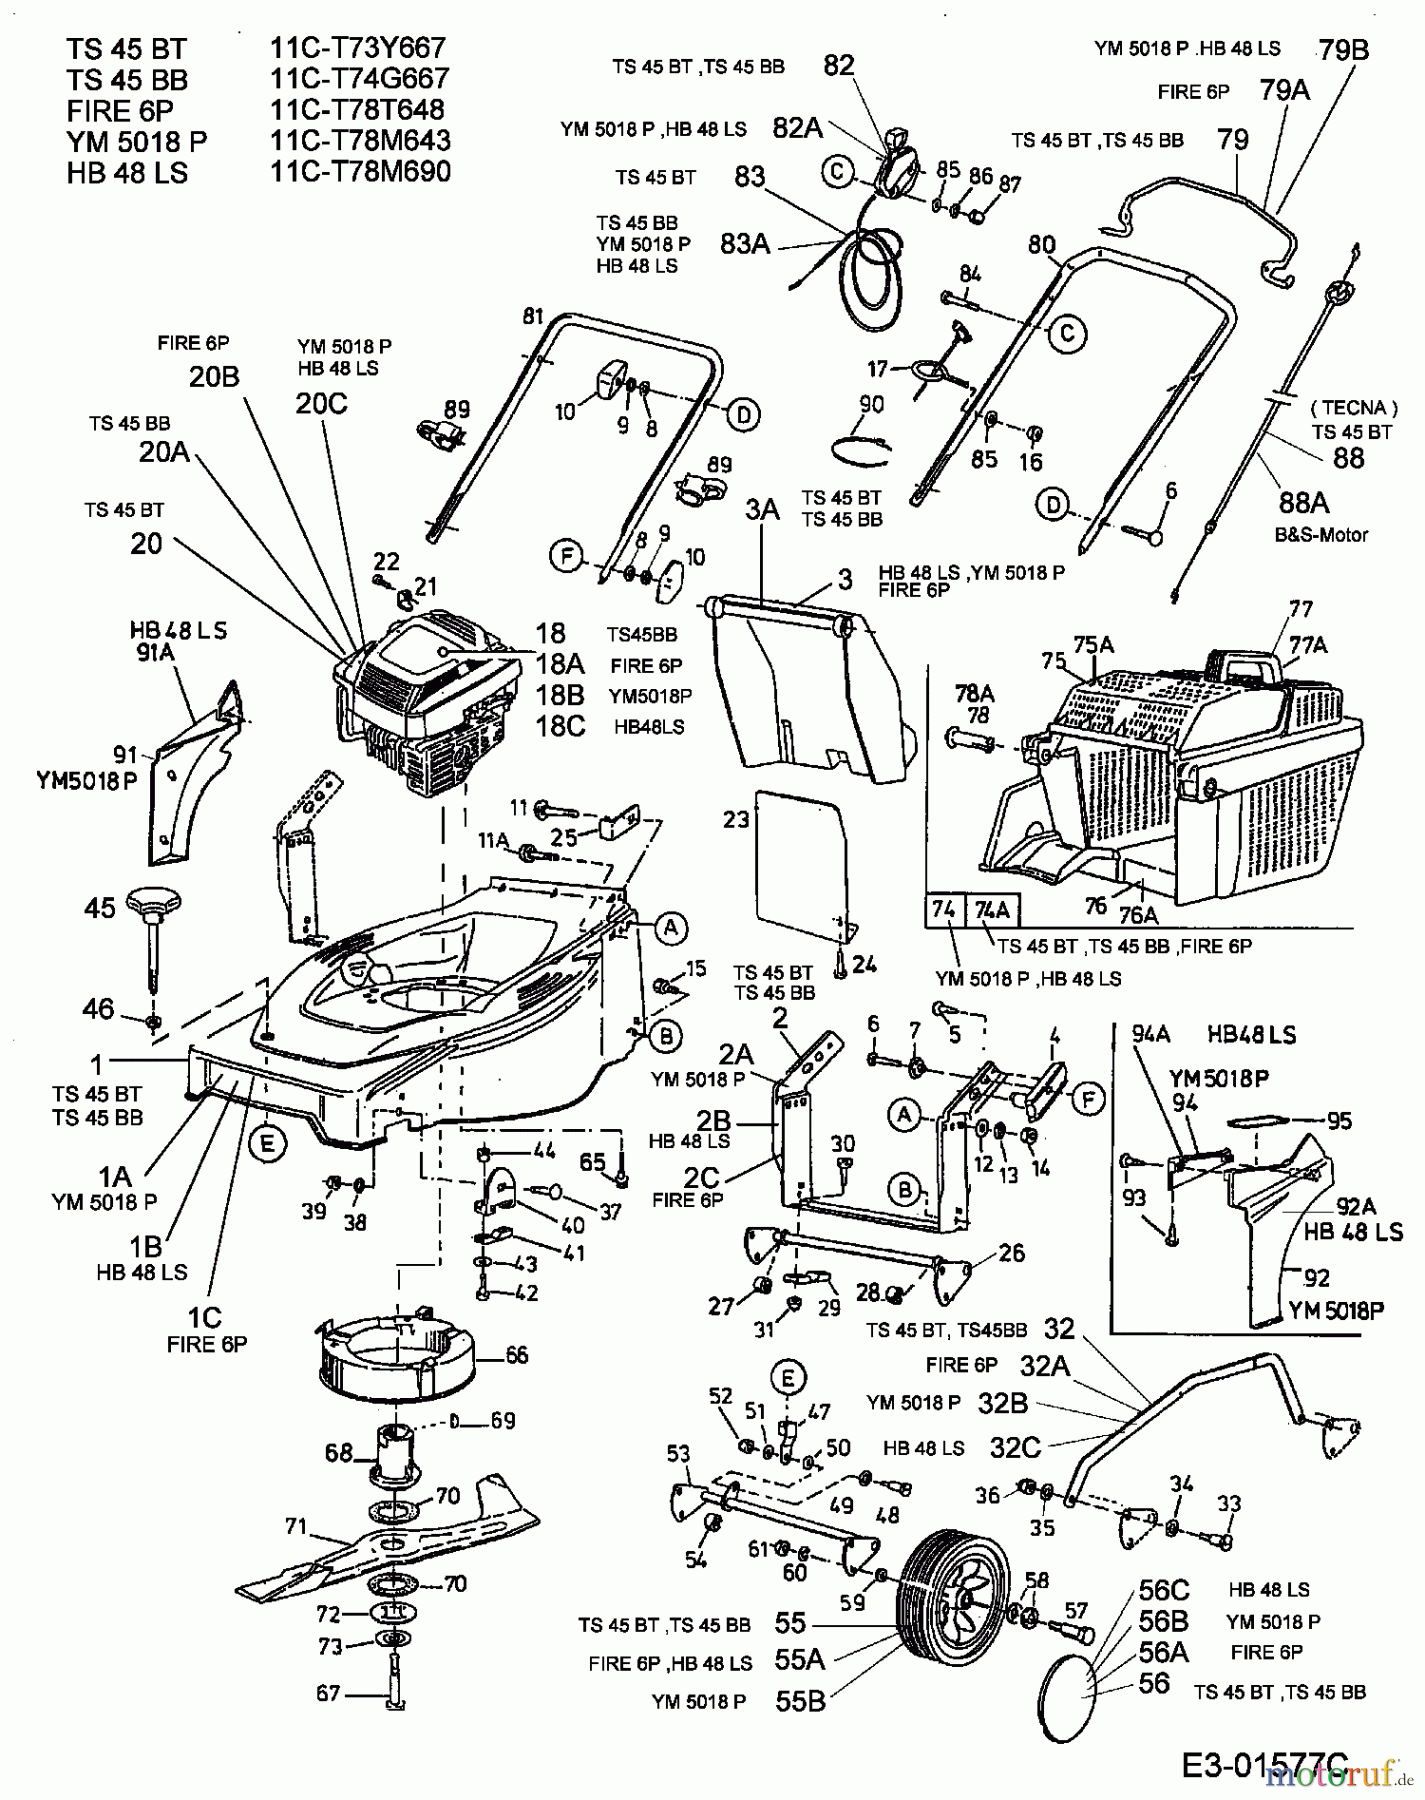  Golf Motormäher FIRE 6 P 11C-T78T648  (2003) Grundgerät